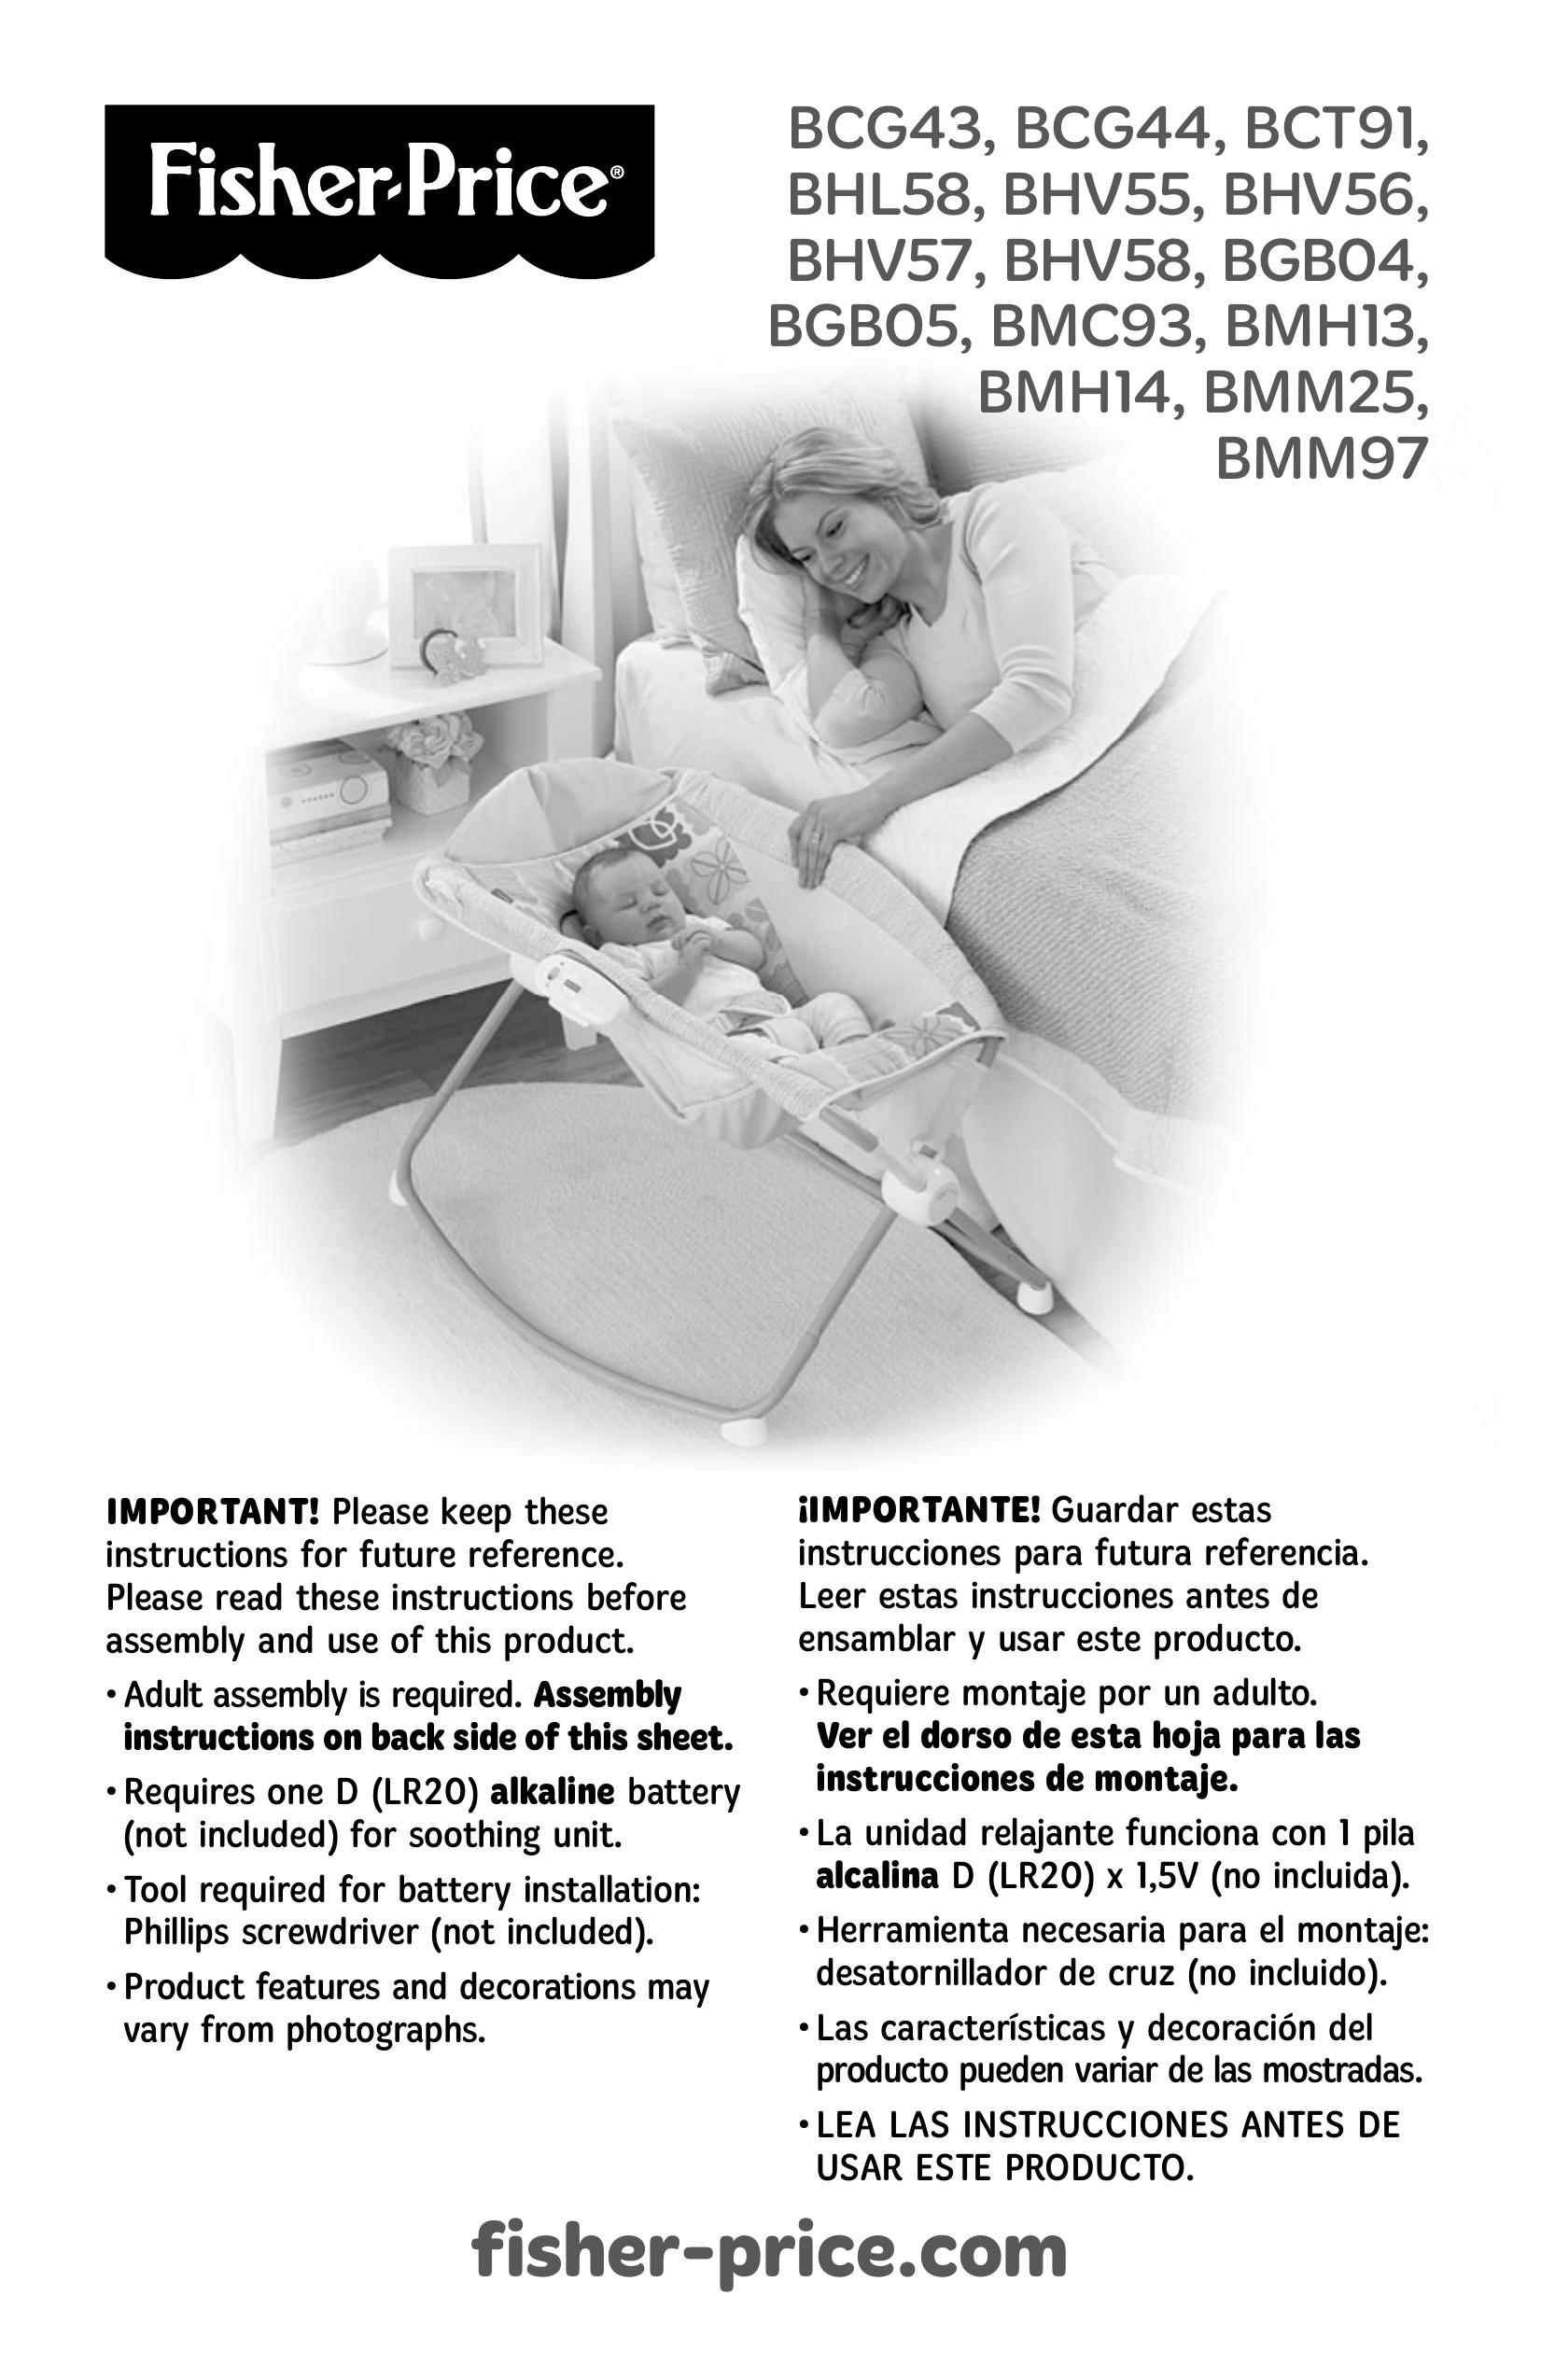 Fisher-Price BGB04 Sleep Apnea Machine User Manual